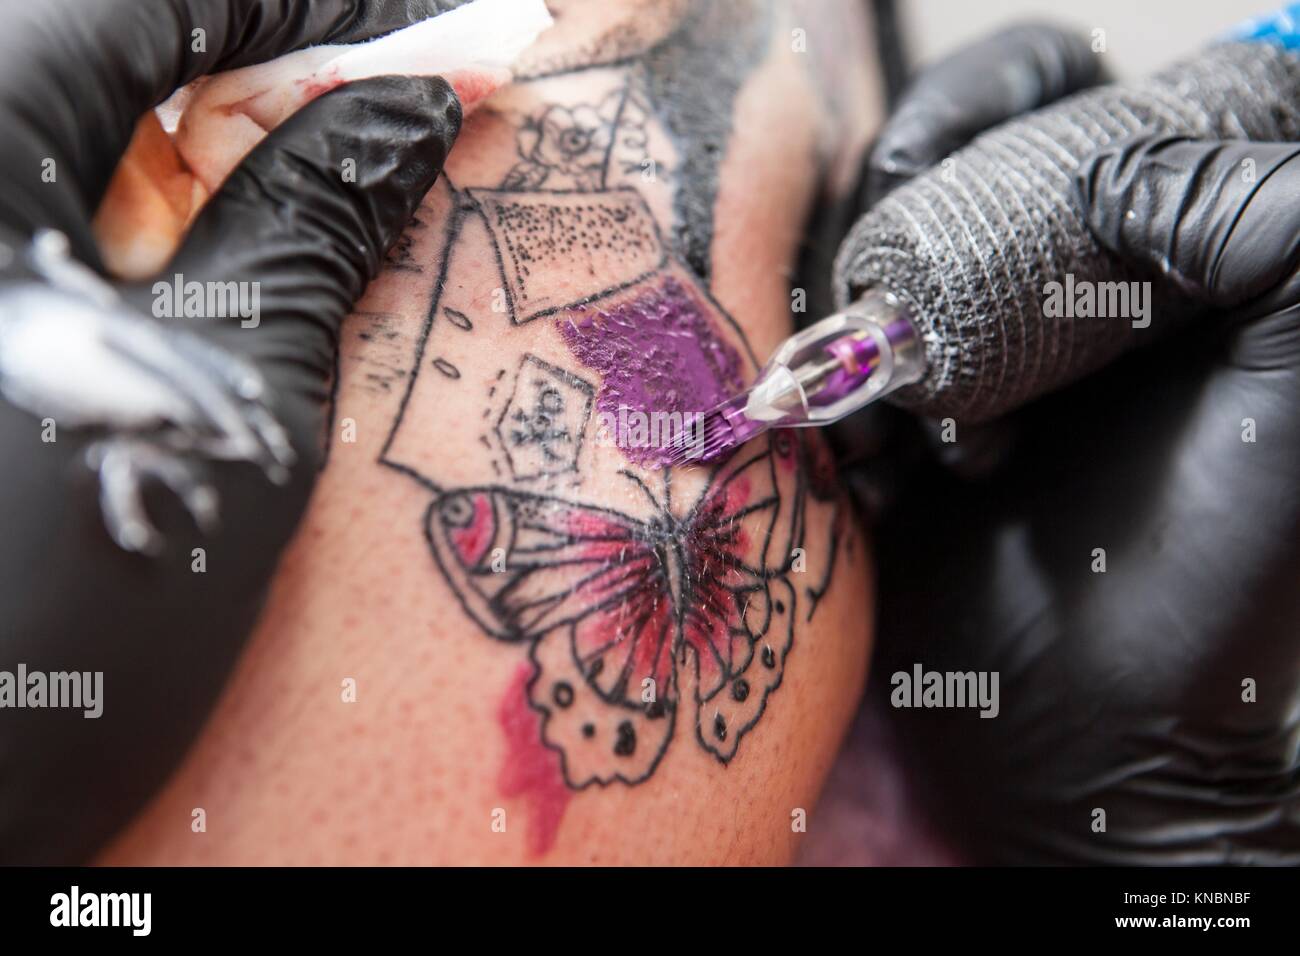 Tatuajes Tatuajes se aplica al brazo. Ella se está llenando de color púrpura el tatuaje. Foto de stock